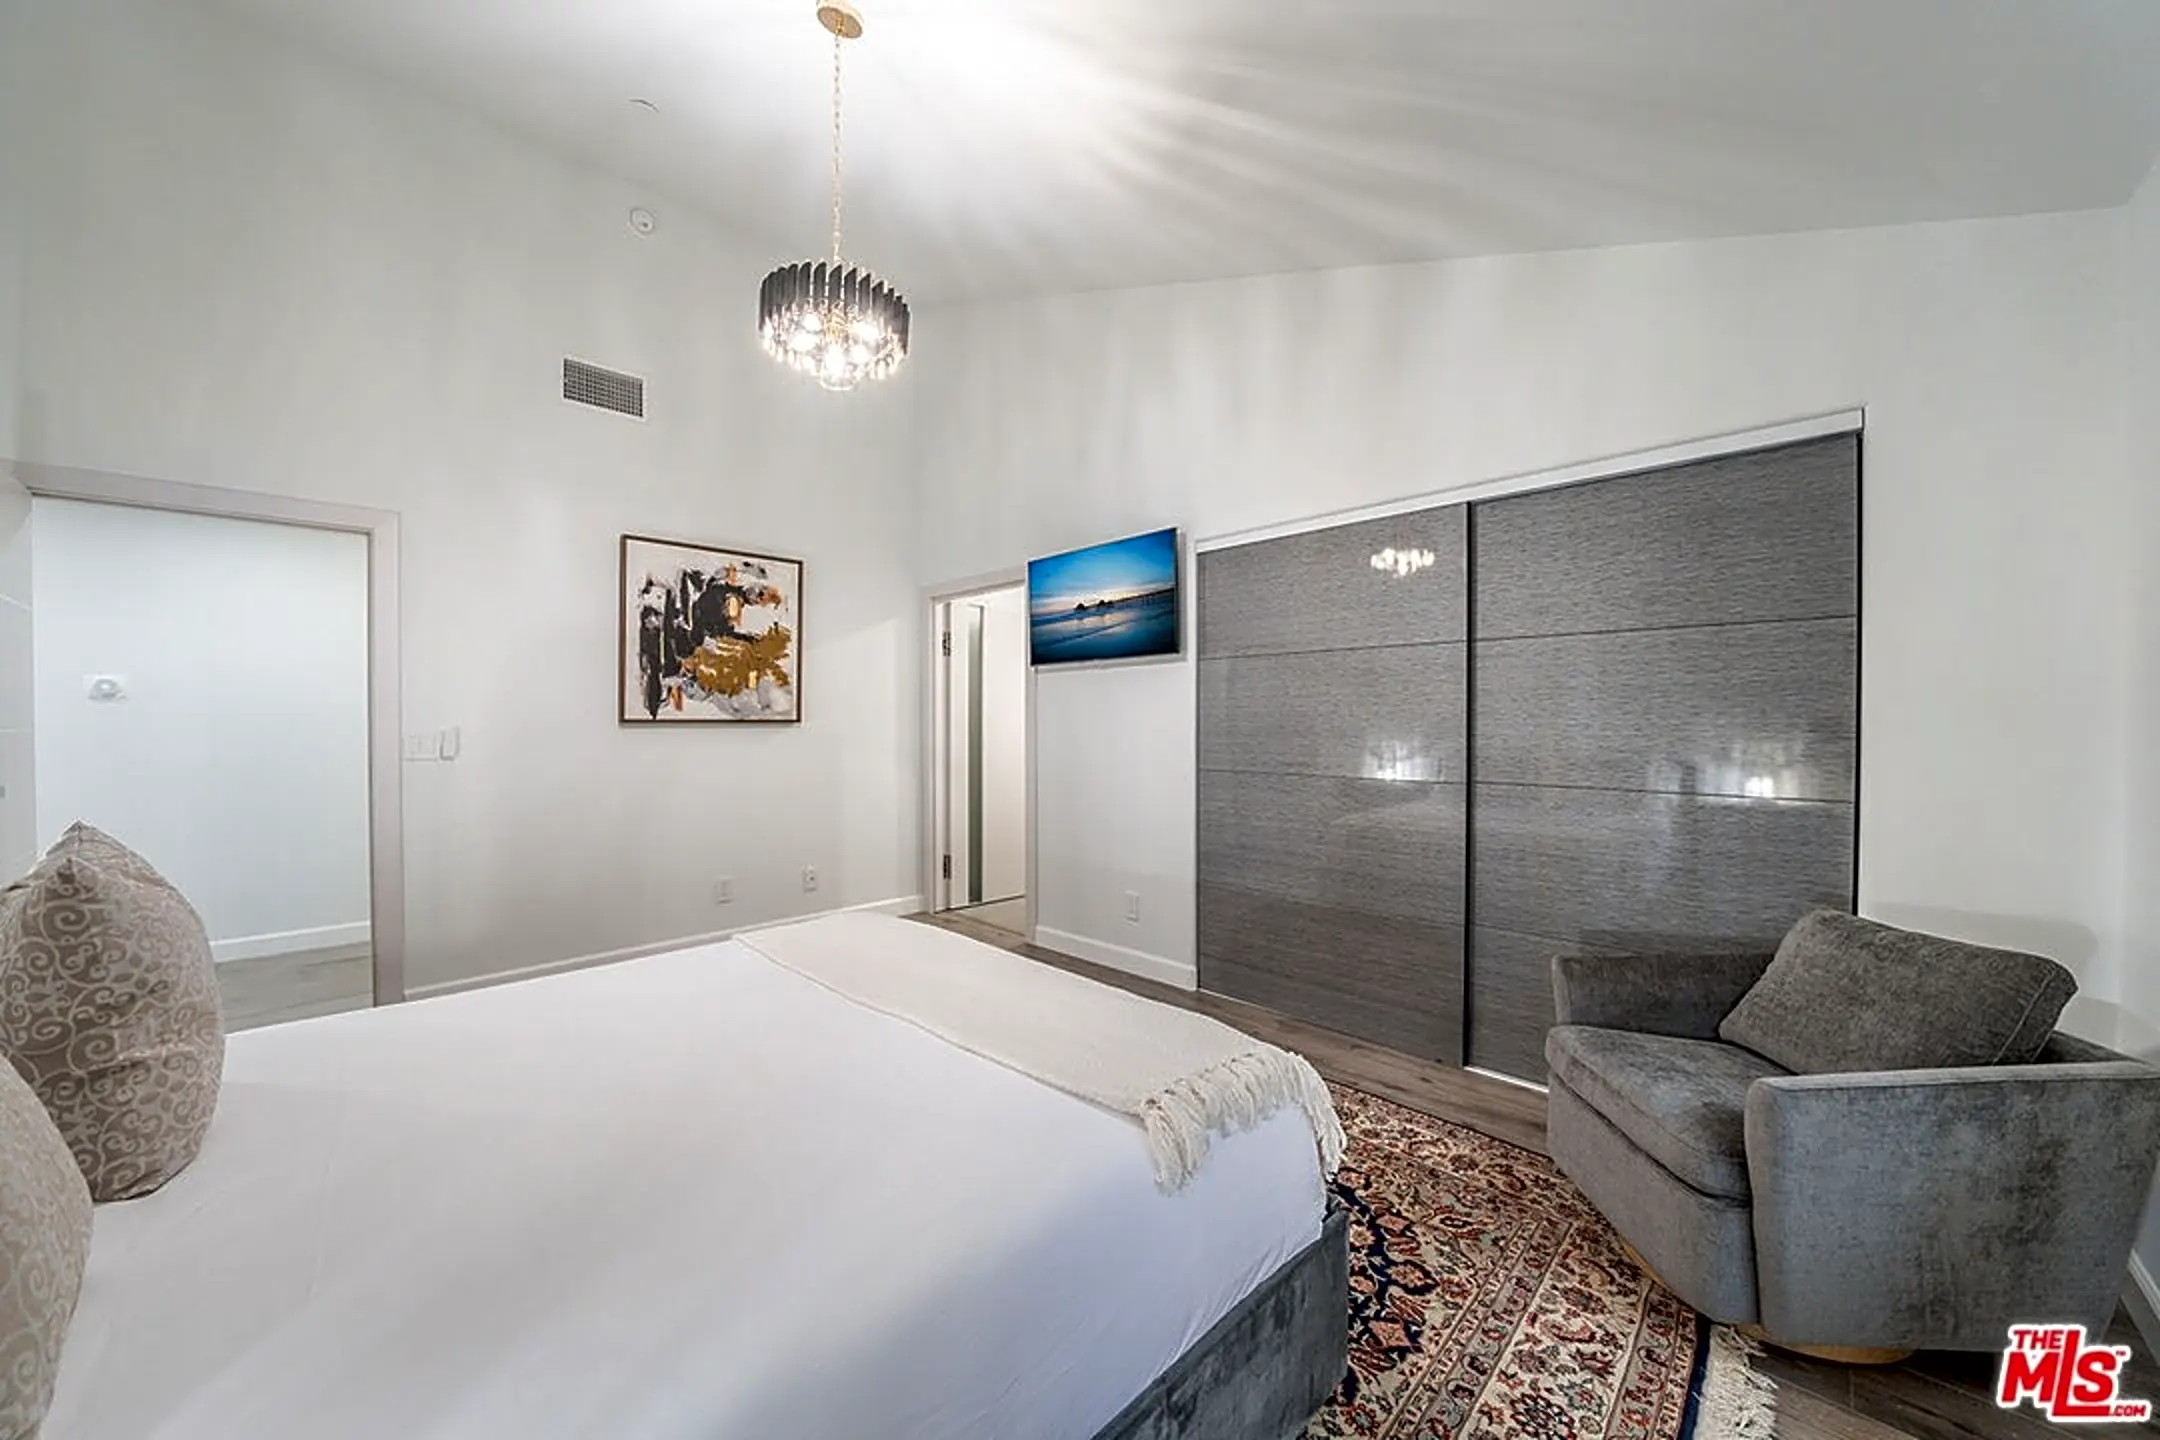 Bedroom - 5010 Fulton Ave - Los Angeles, CA